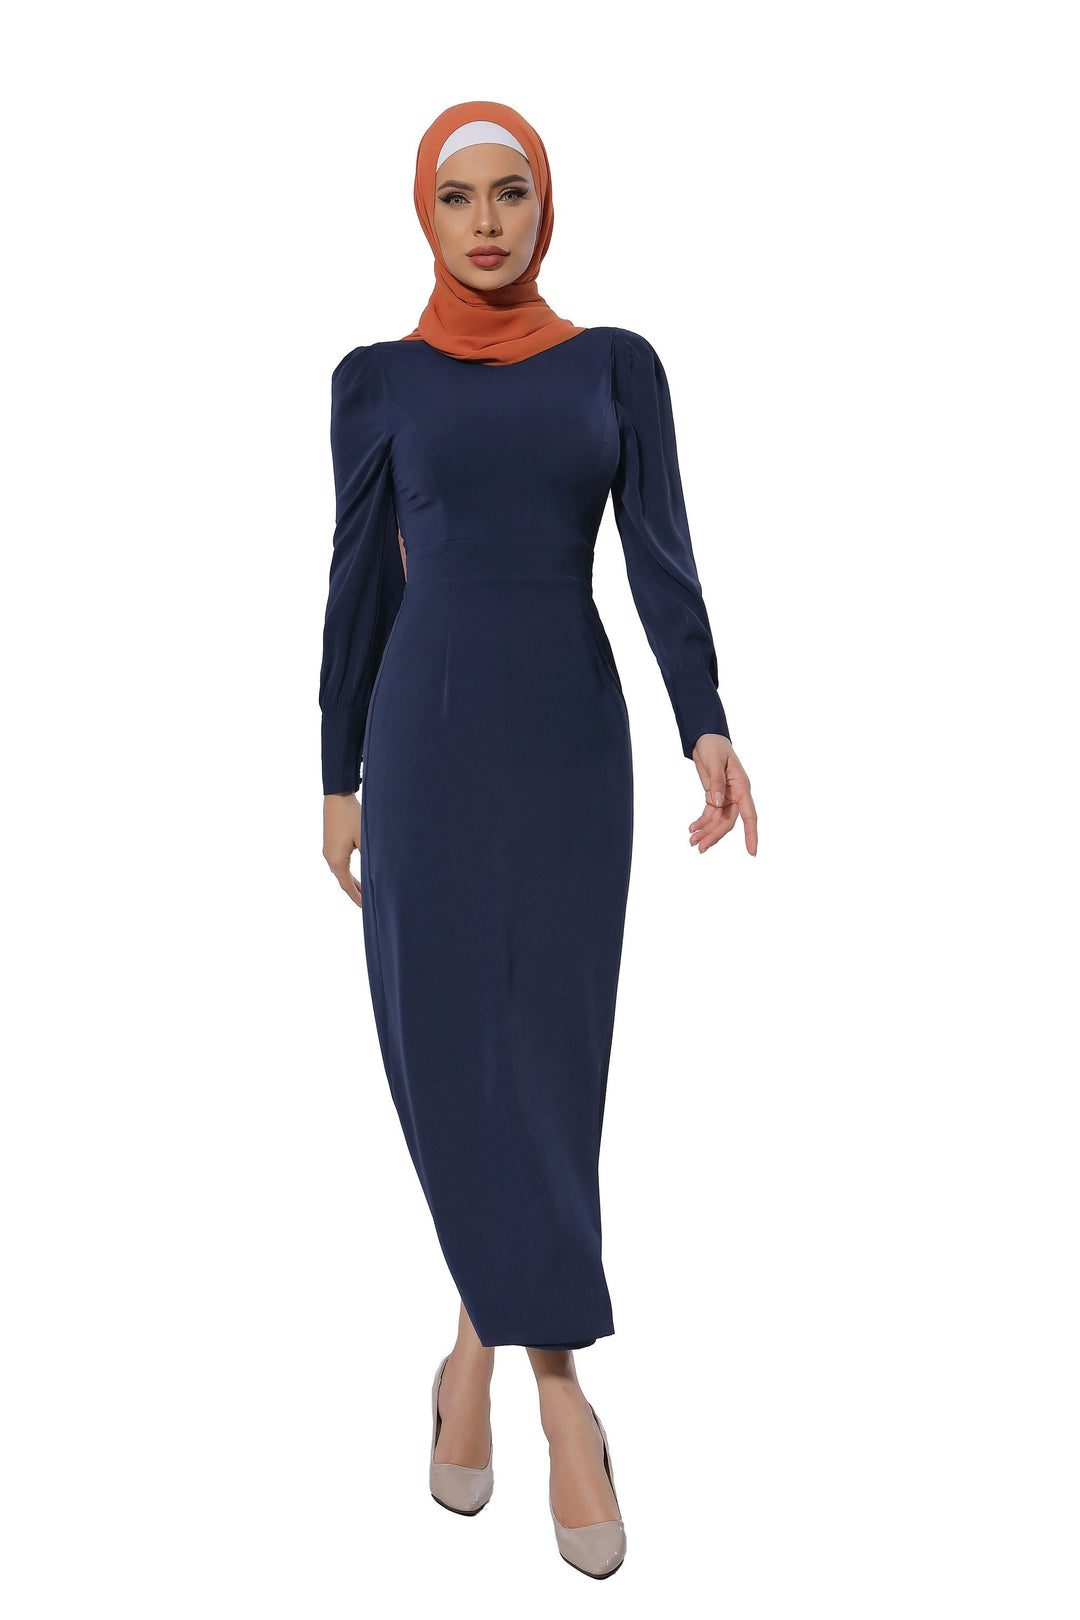 Urban Modesty - Navy Blue Perfectly Pencil Long Sleeve Maxi Dress